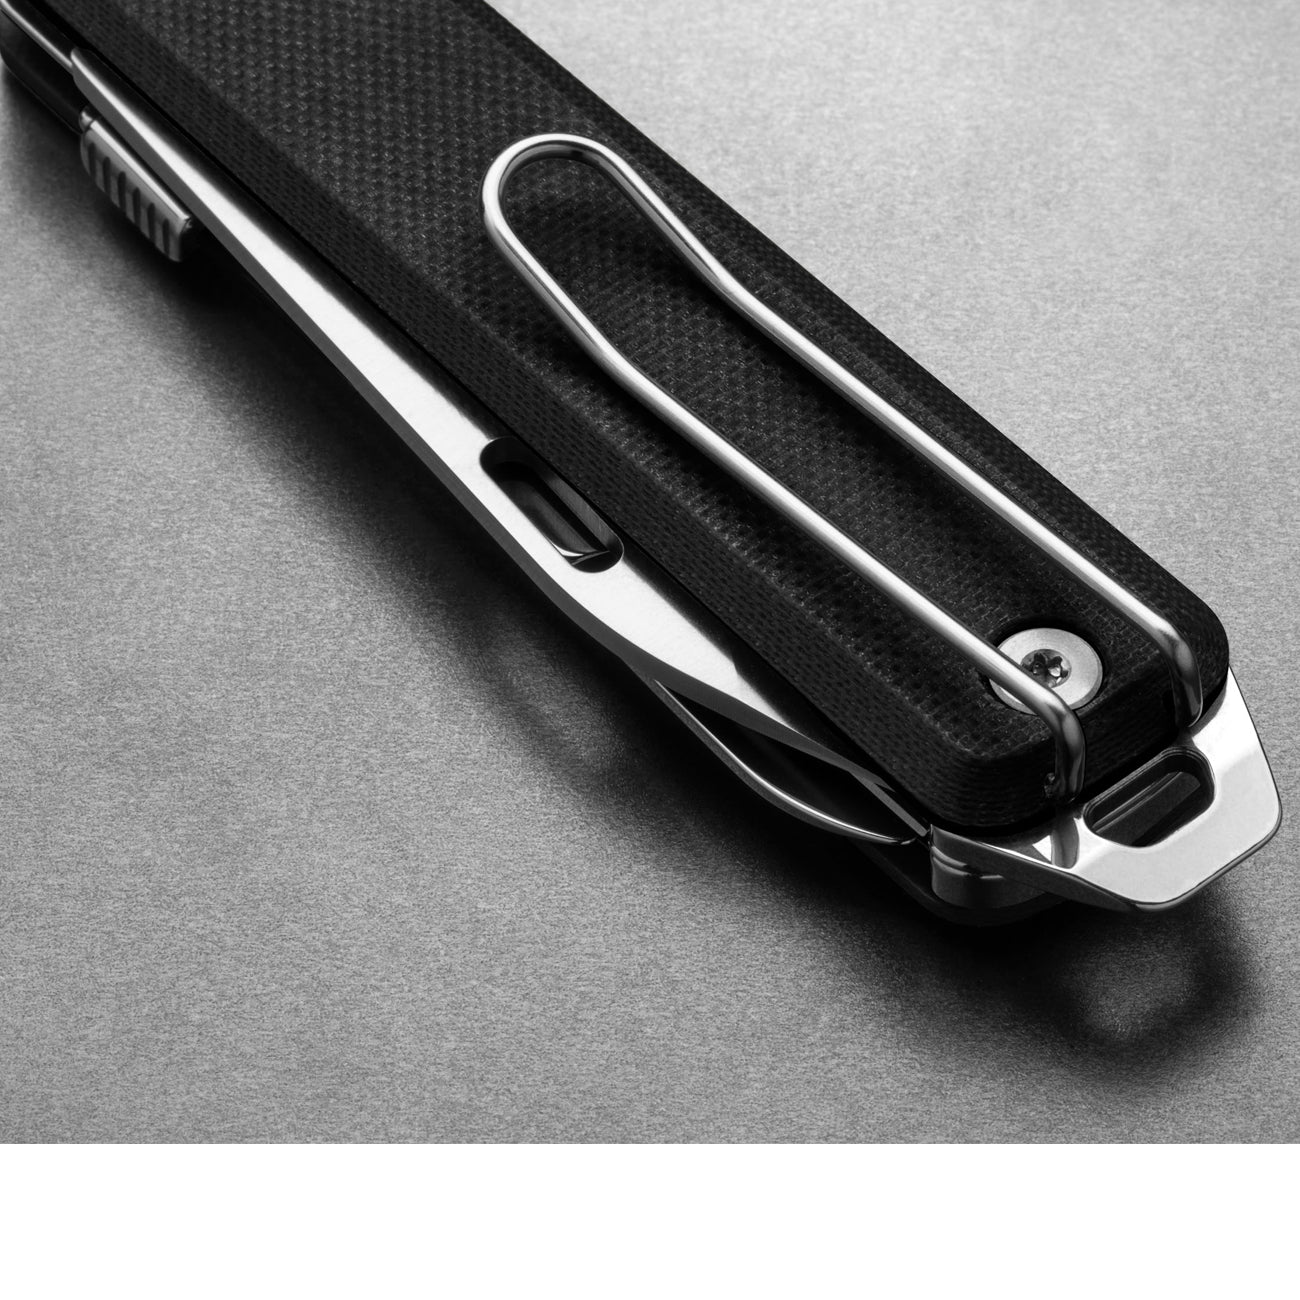 The James Brand The Ellis Taschenmesser Scissors Black Stainless G10 Straight